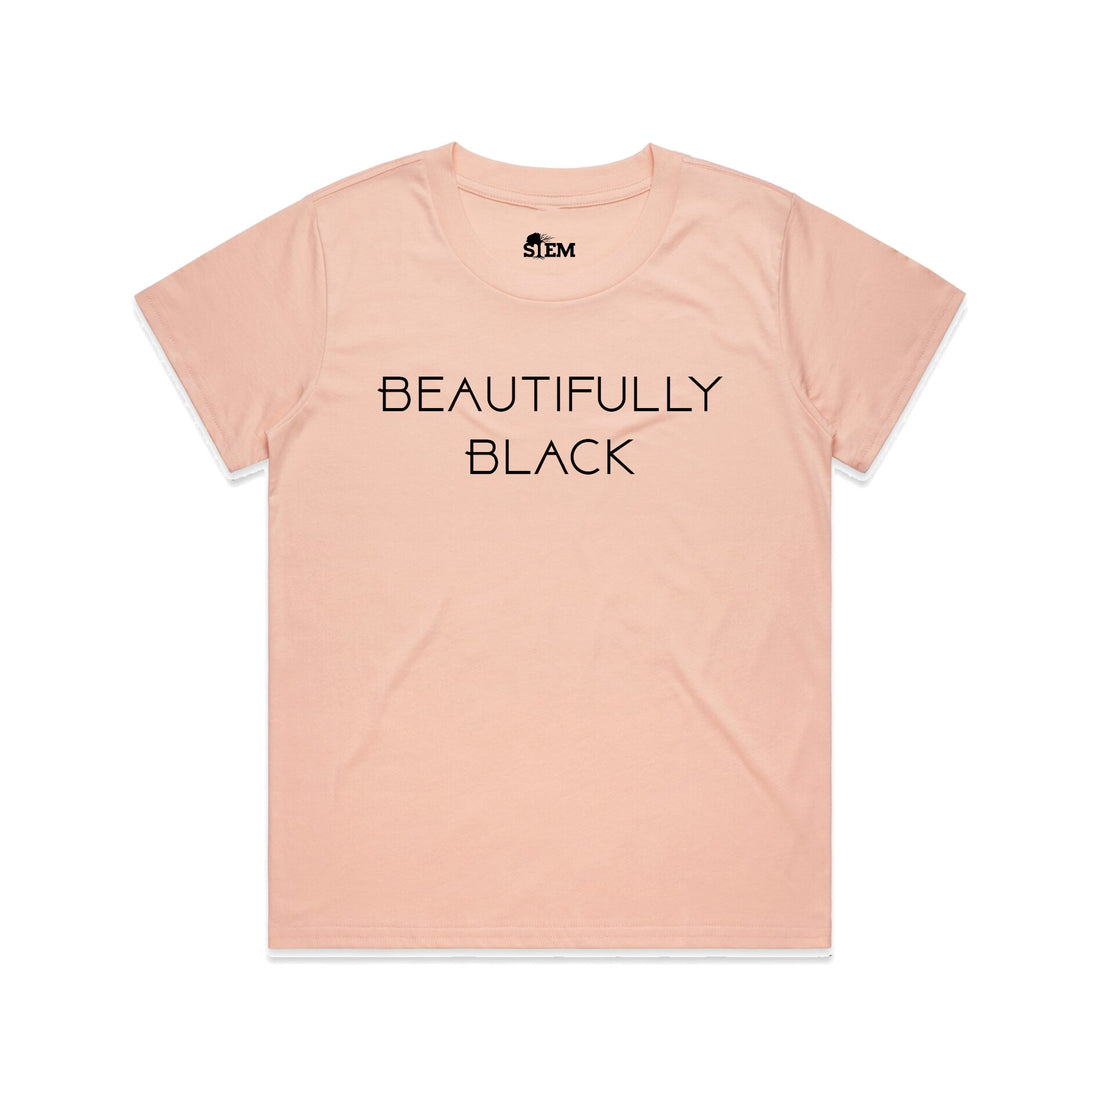 STEM Woman's "Beautifully Black" T-Shirt